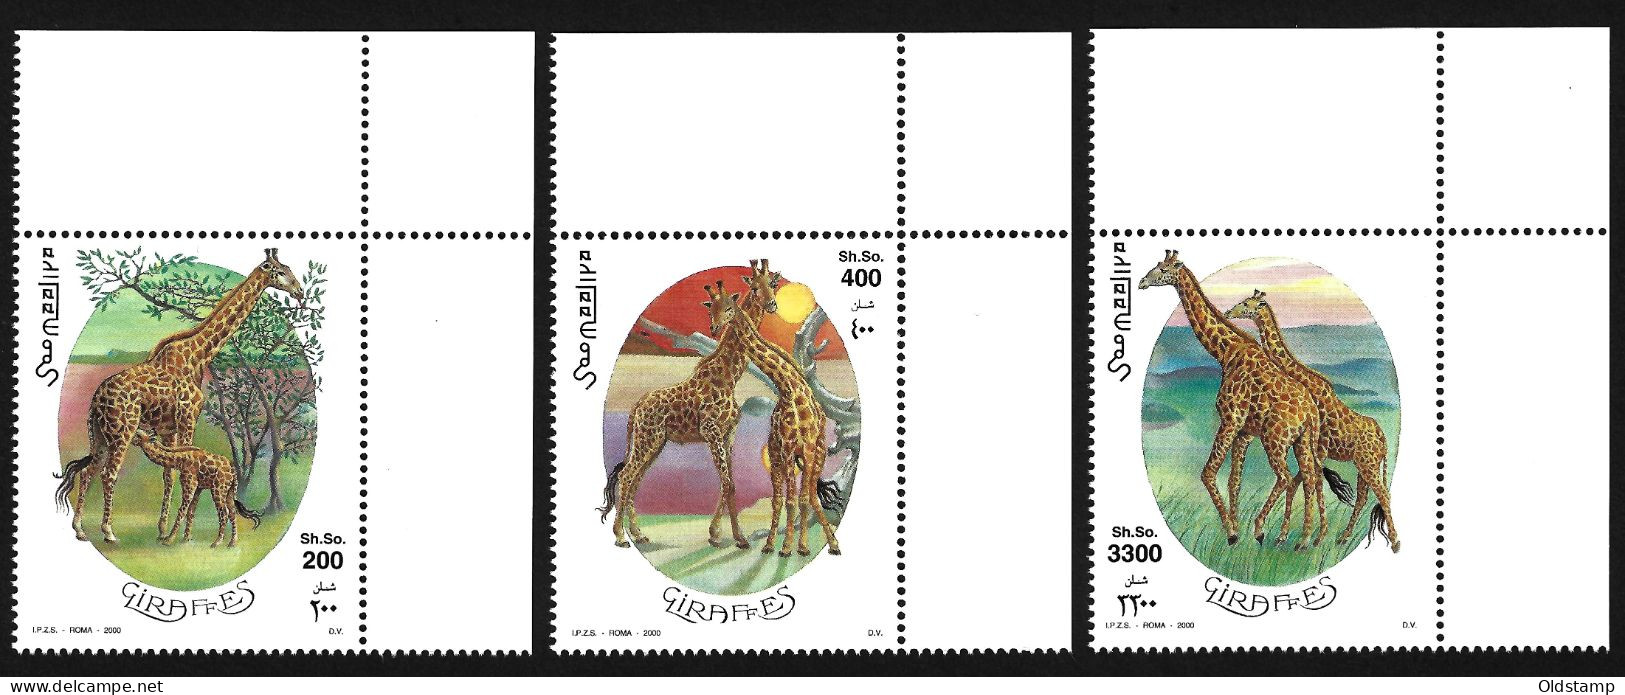 ANIMALS Somalia 2000 Giraffes MNH Full Set Savannah Fauna Wild Life Nature Africa Prairie Stamps Serie Corner Top - Jirafas